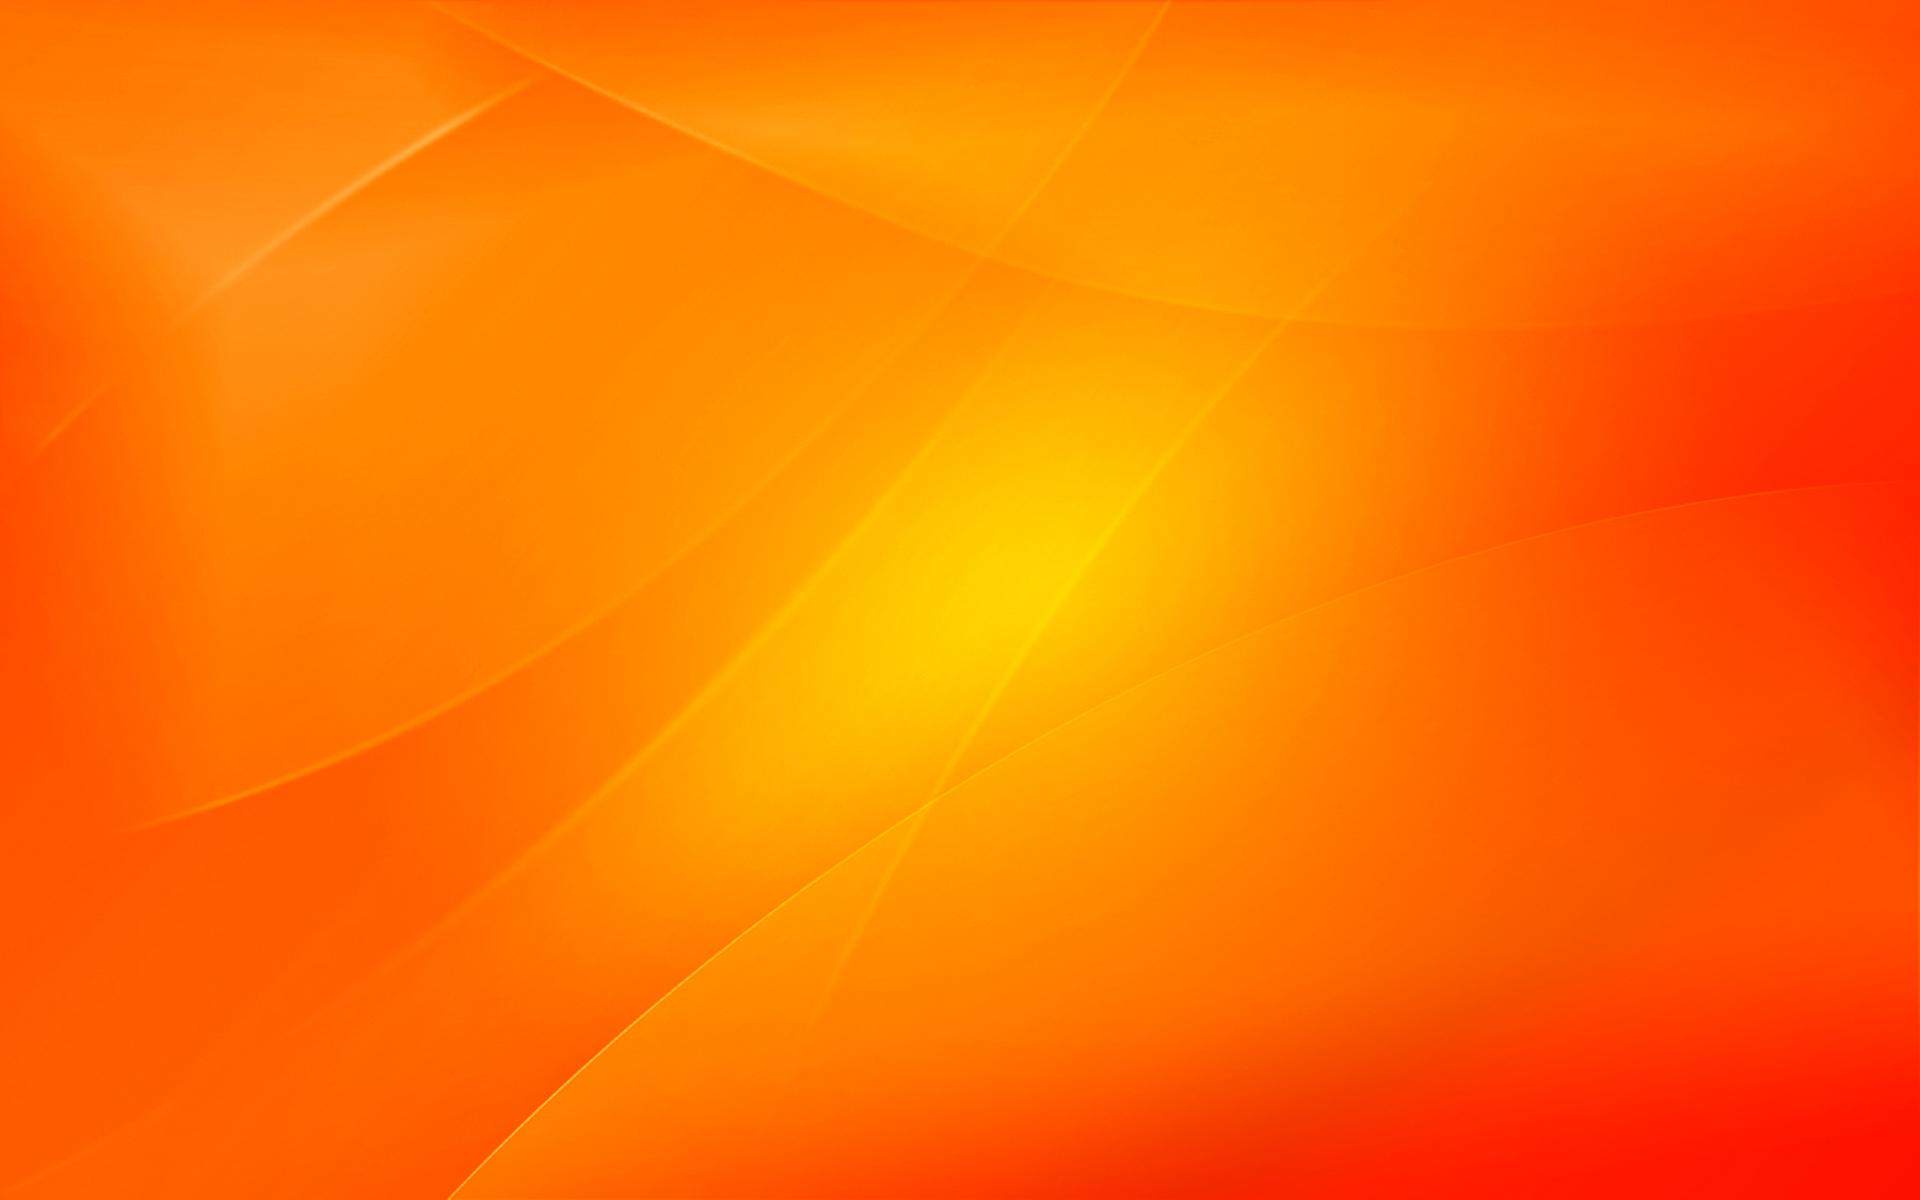 Orange Background Wallpaper HD Background Image Pics Photos